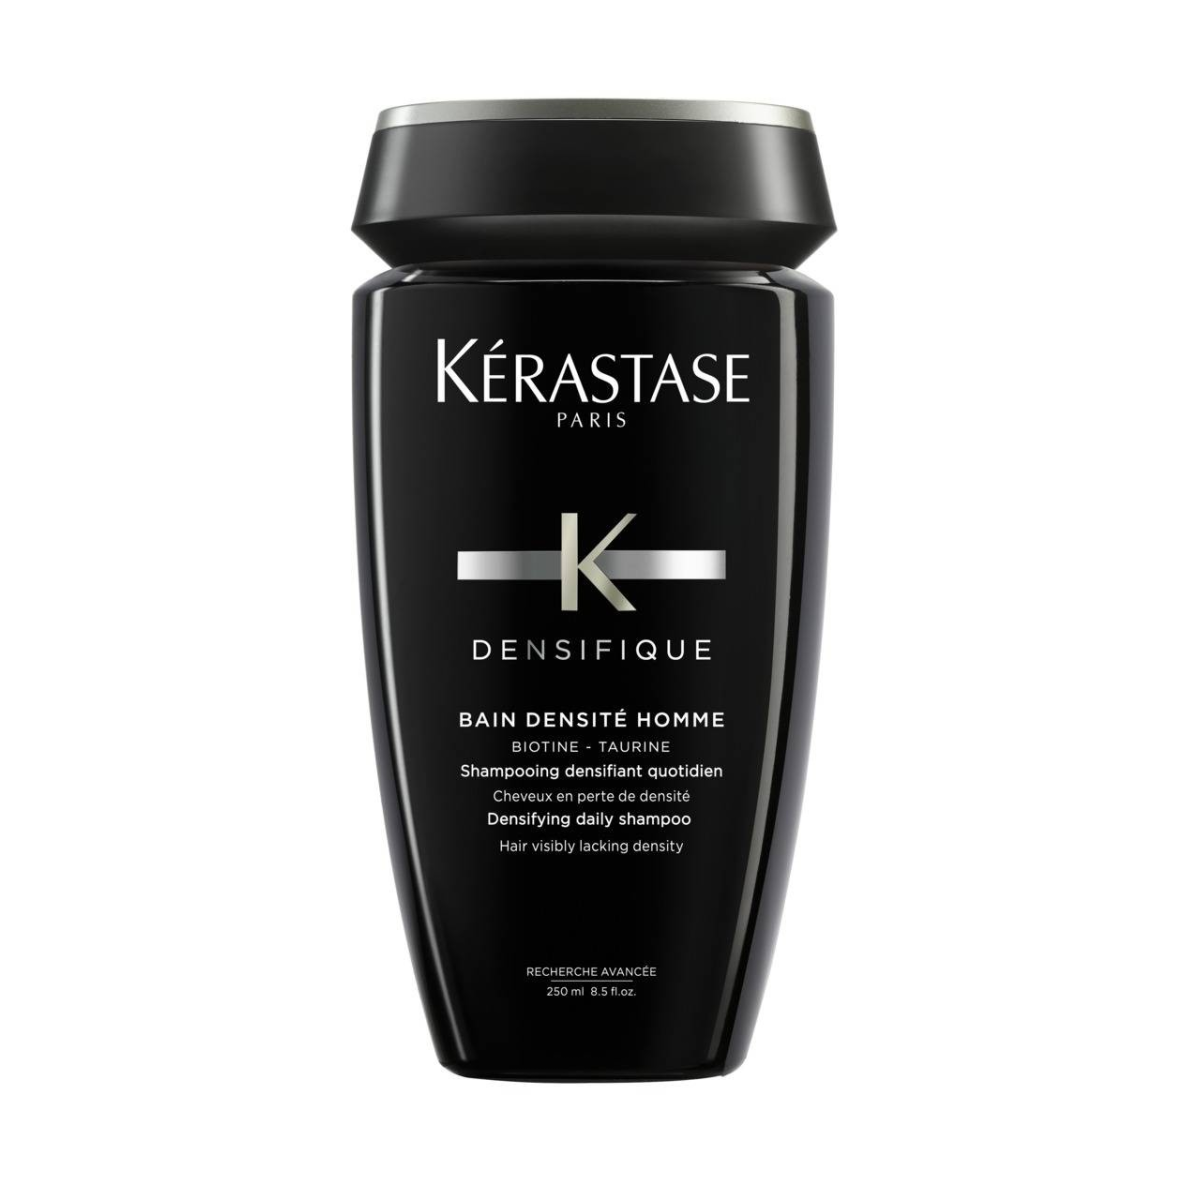 KÉRASTASE - DENSIFIQUE - BAIN DENSITÉ HOMME (250ml) Shampoo densificante